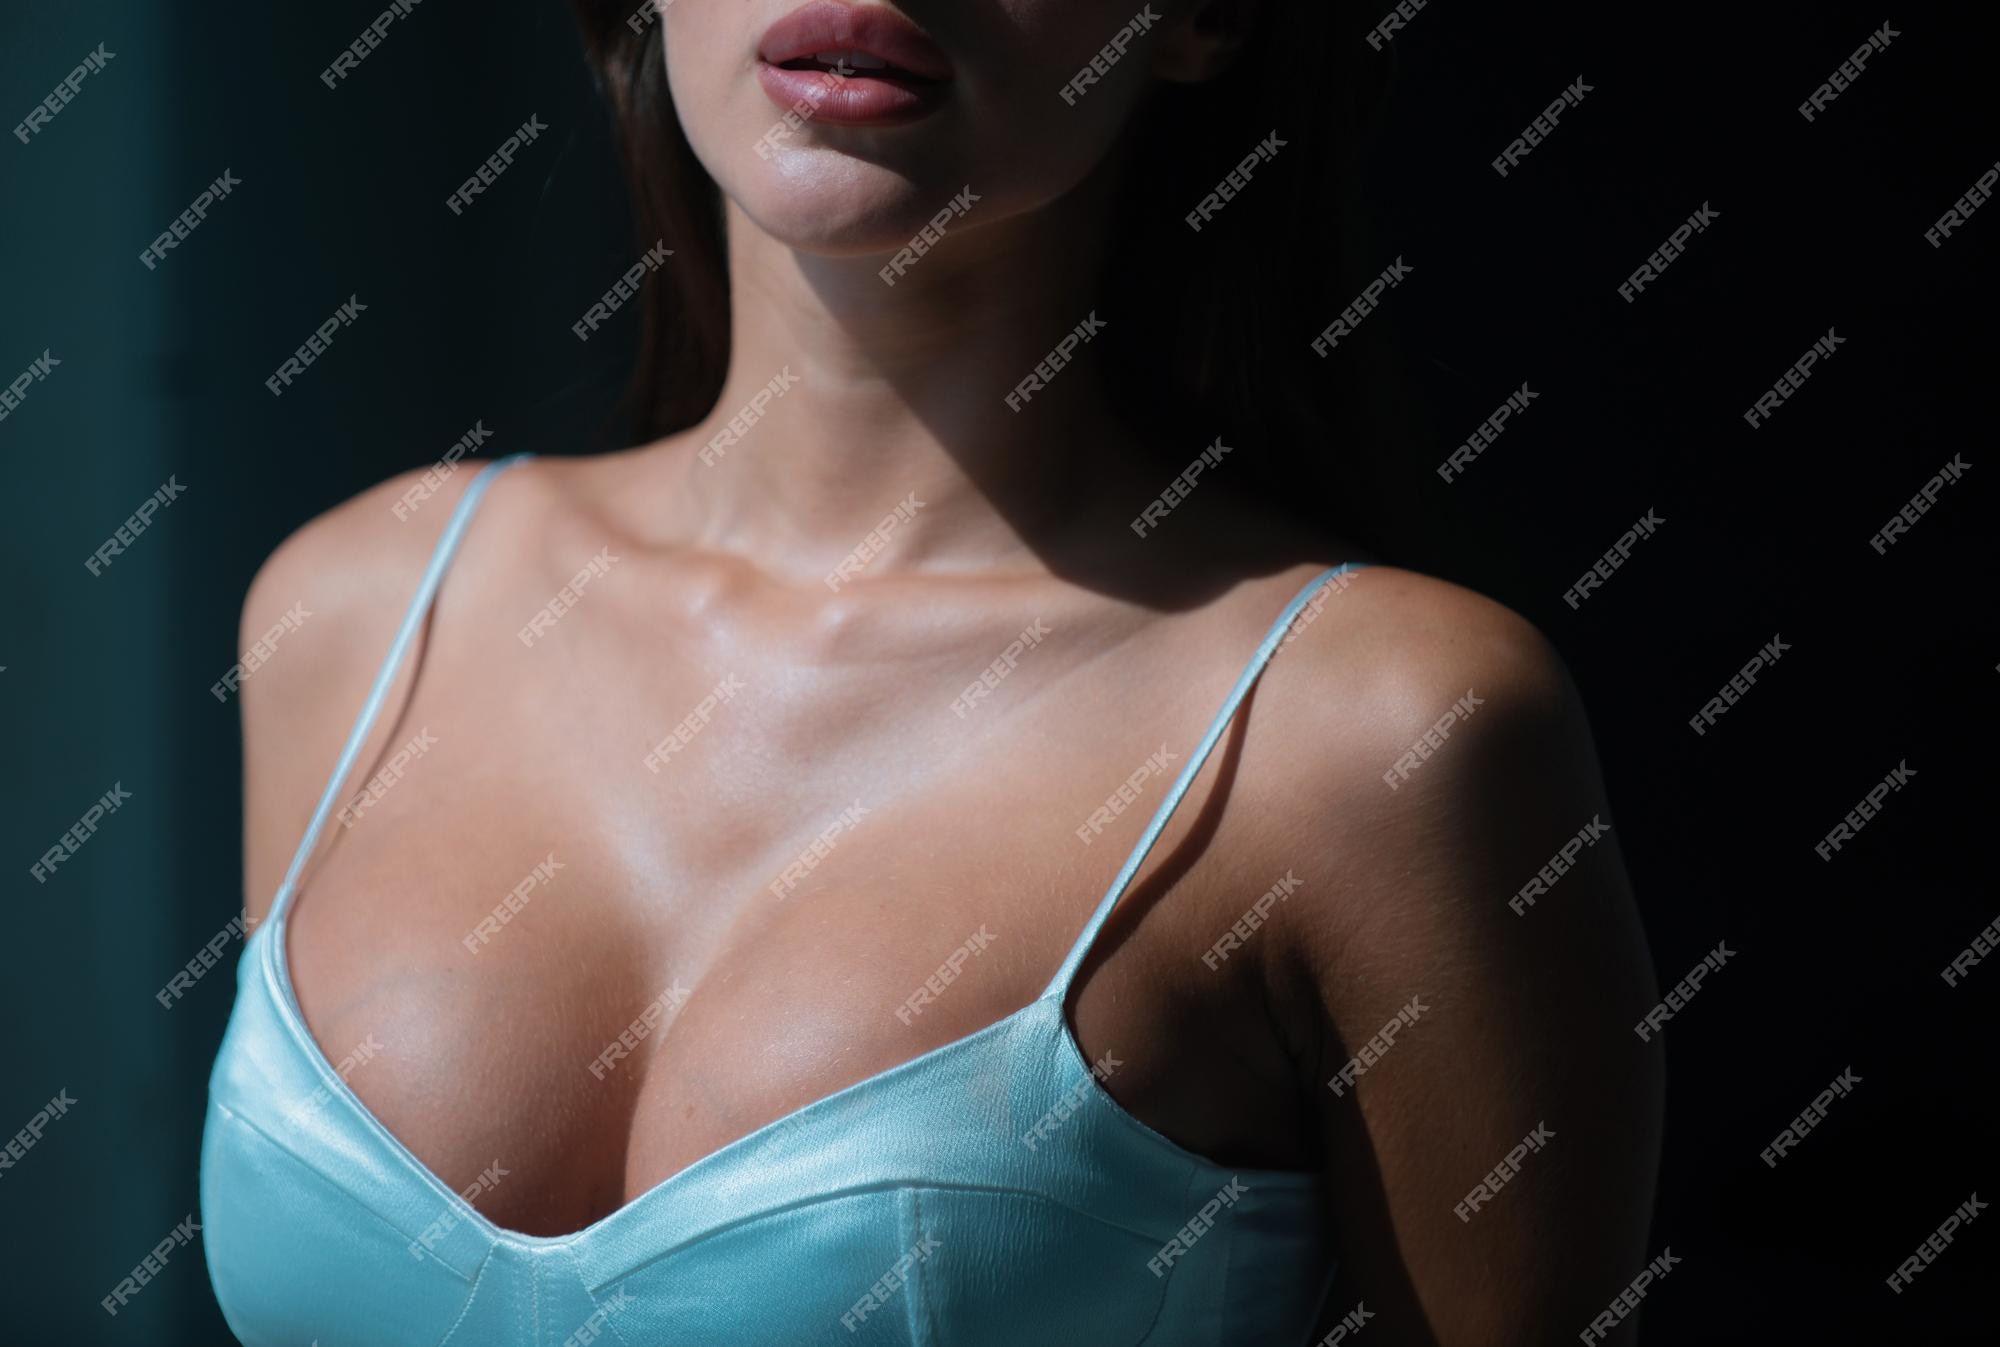 daniel acquah recommends perfect natural boobs pic